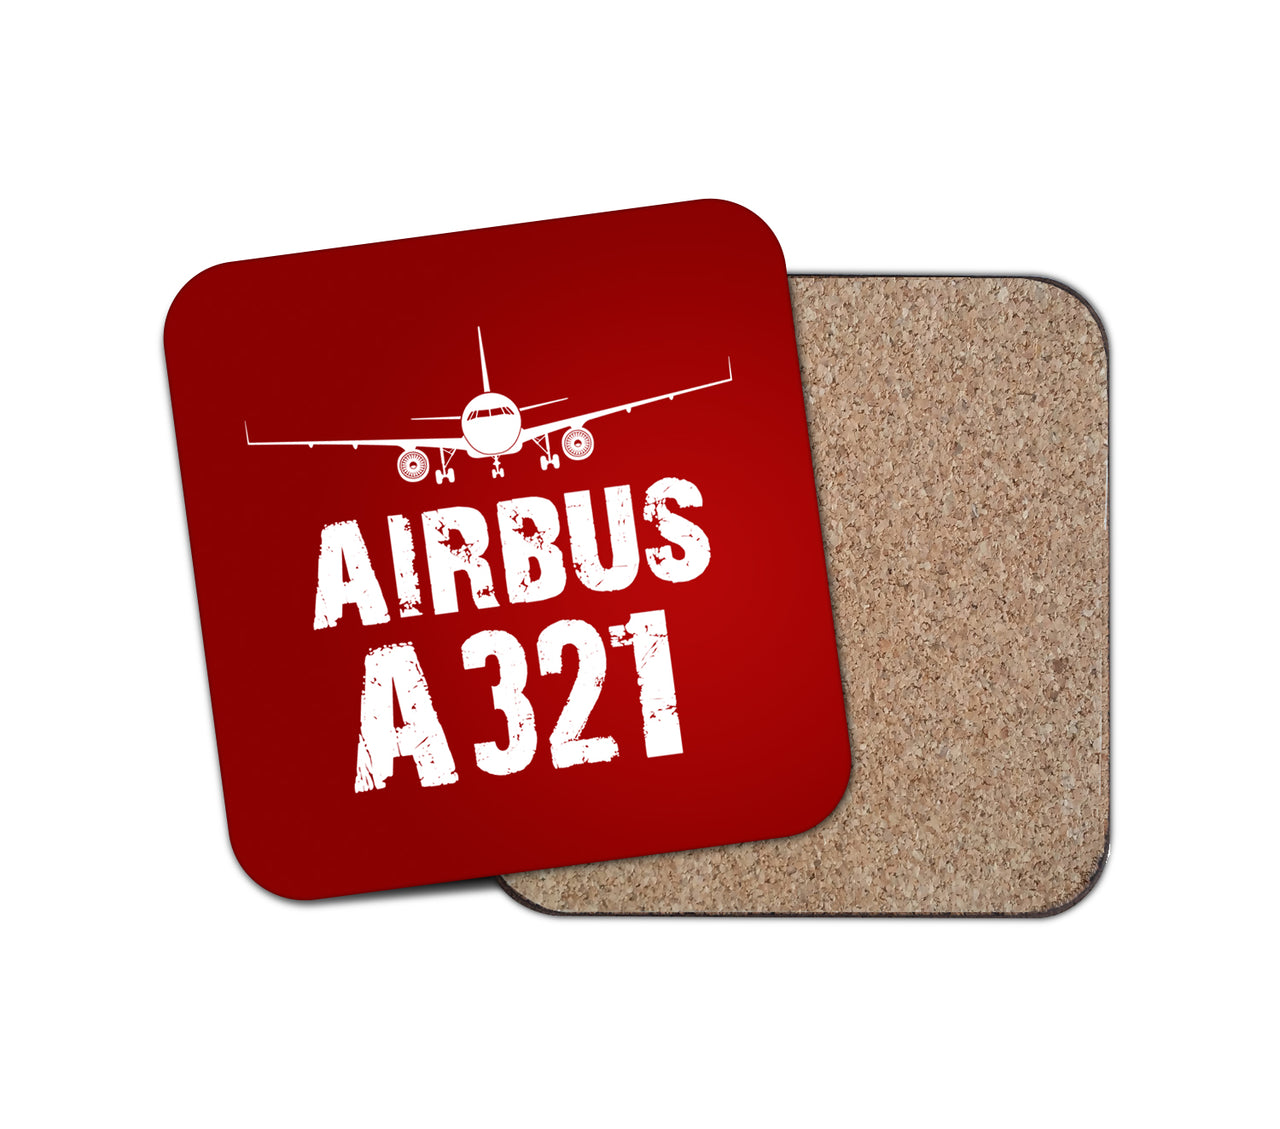 Airbus A320 & Plane Designed Coasters